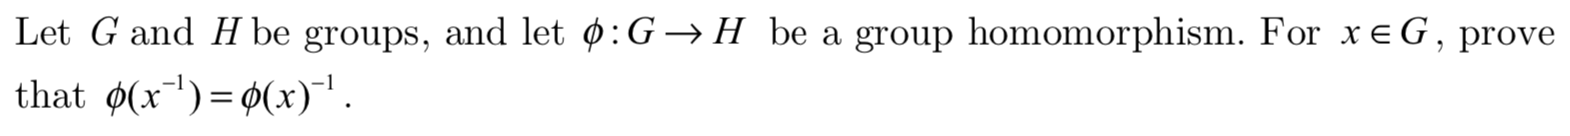 Let G and H be groups, and let ø:G-> H be a group homomorphism. For xeG, prove
that )x).
